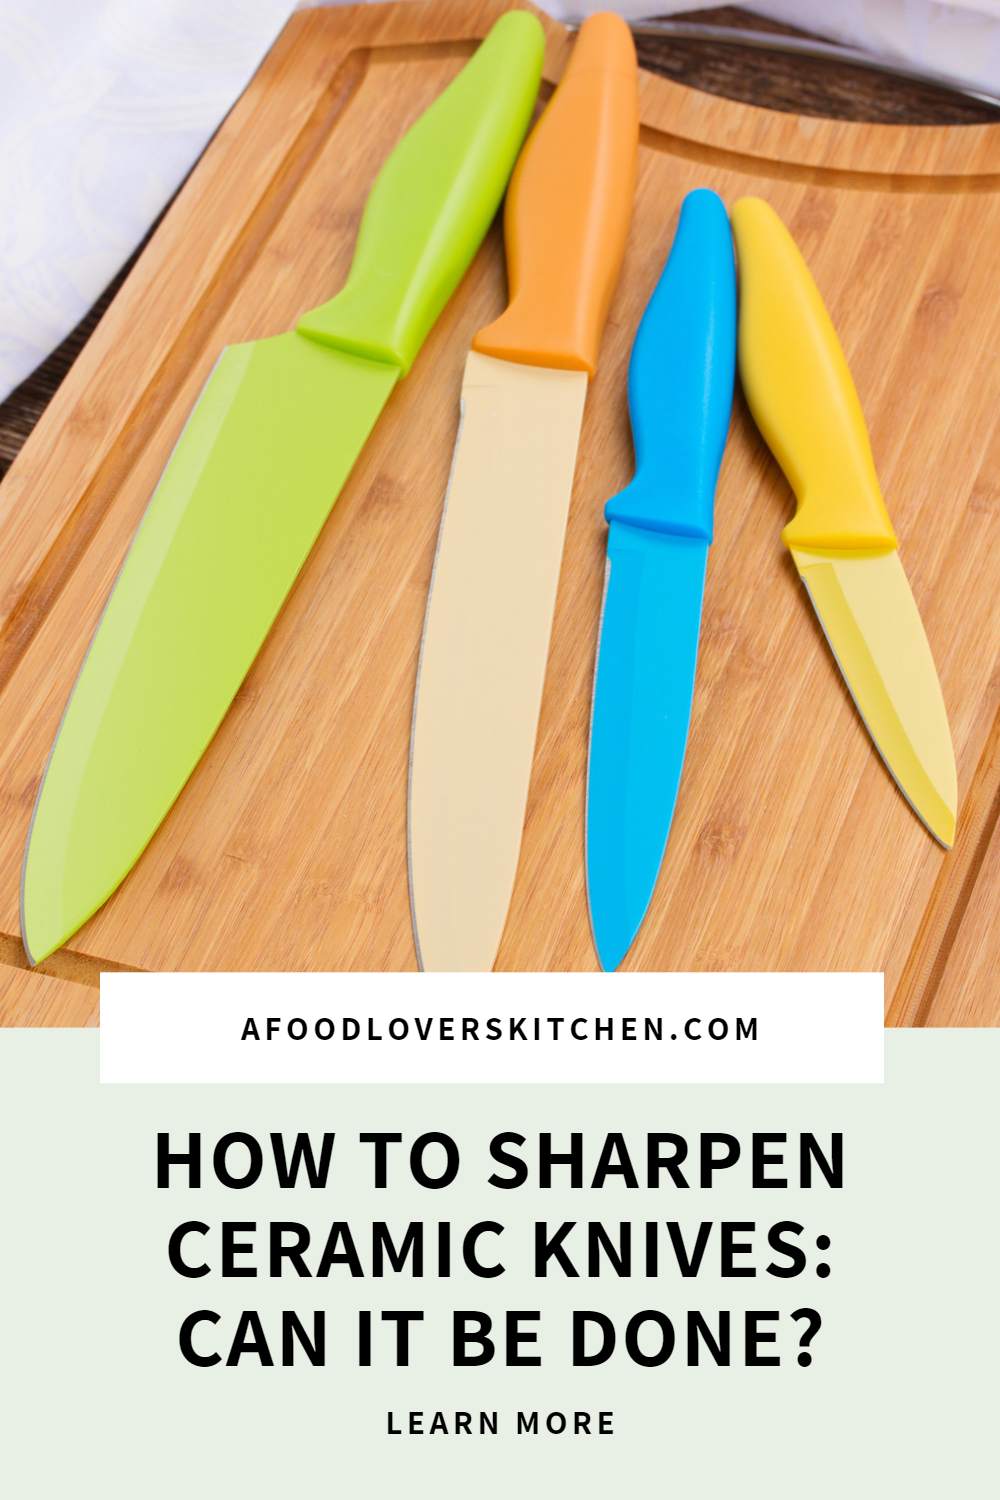 https://afoodloverskitchen.com/wp-content/uploads/sharpen-ceramic-knives-pin1.jpg